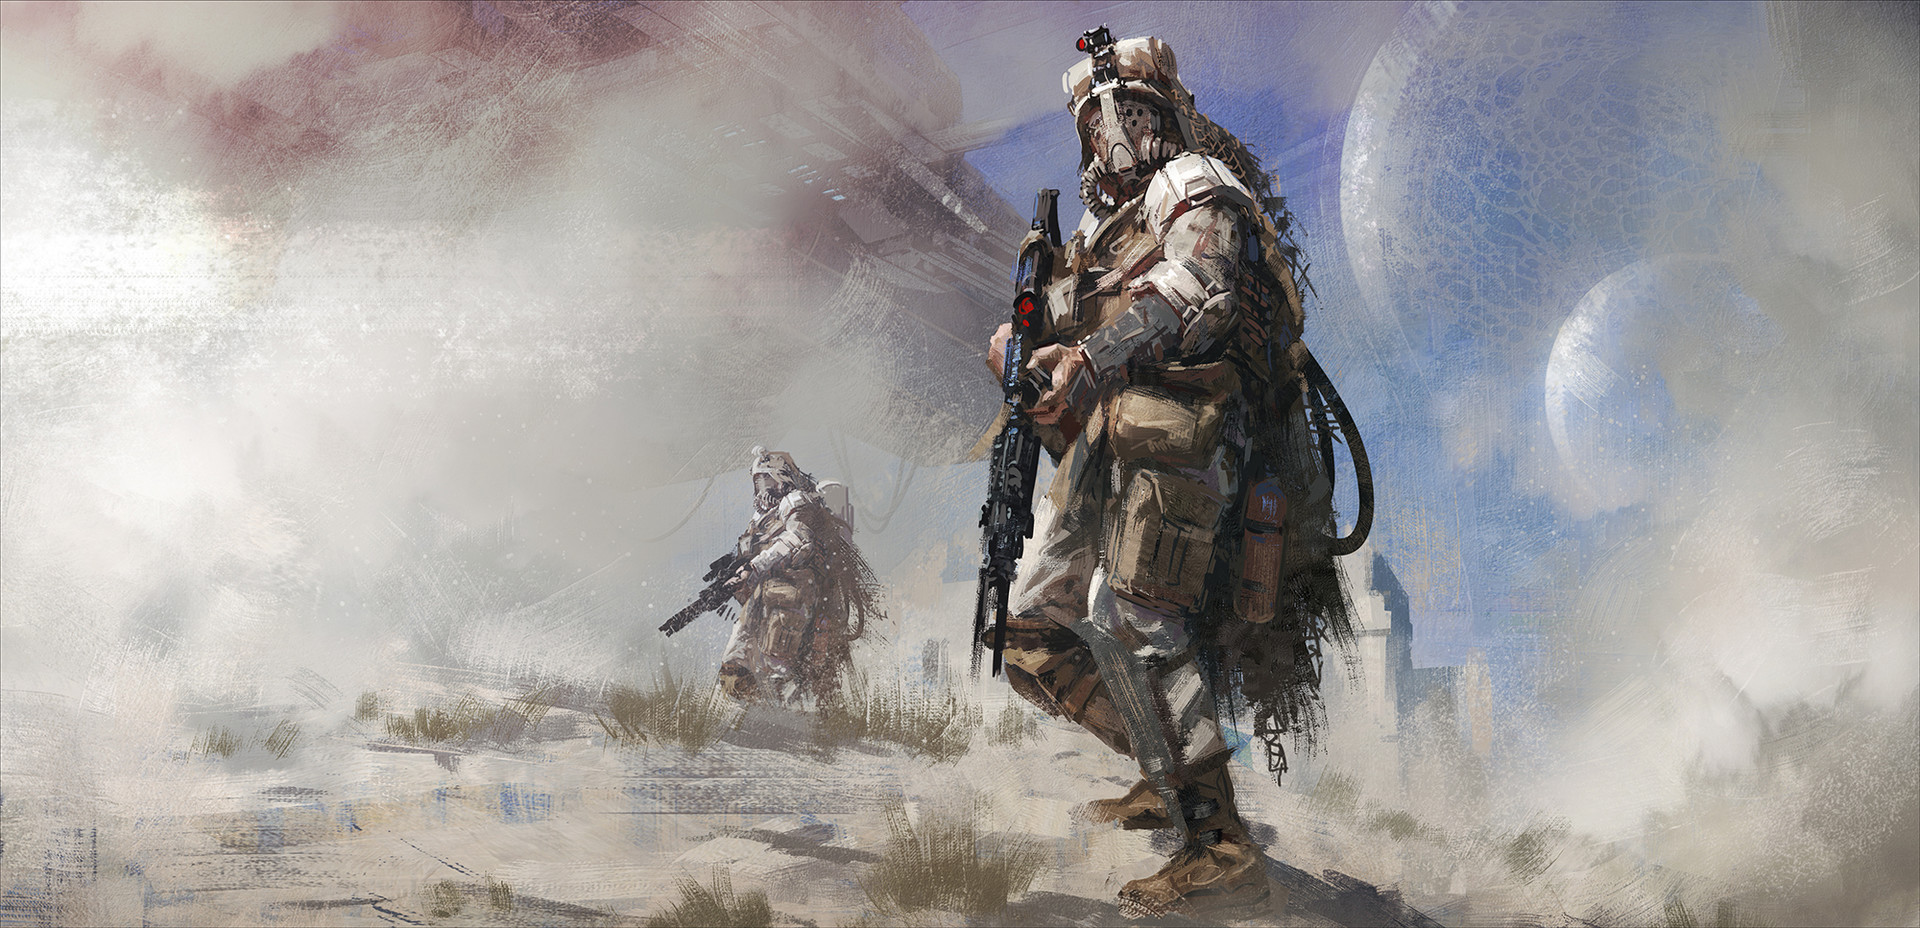 General 1920x928 Joakim Ericsson artwork digital art illustration painting concept art futuristic soldier rifles desert gas masks apocalyptic 2D science fiction camouflage